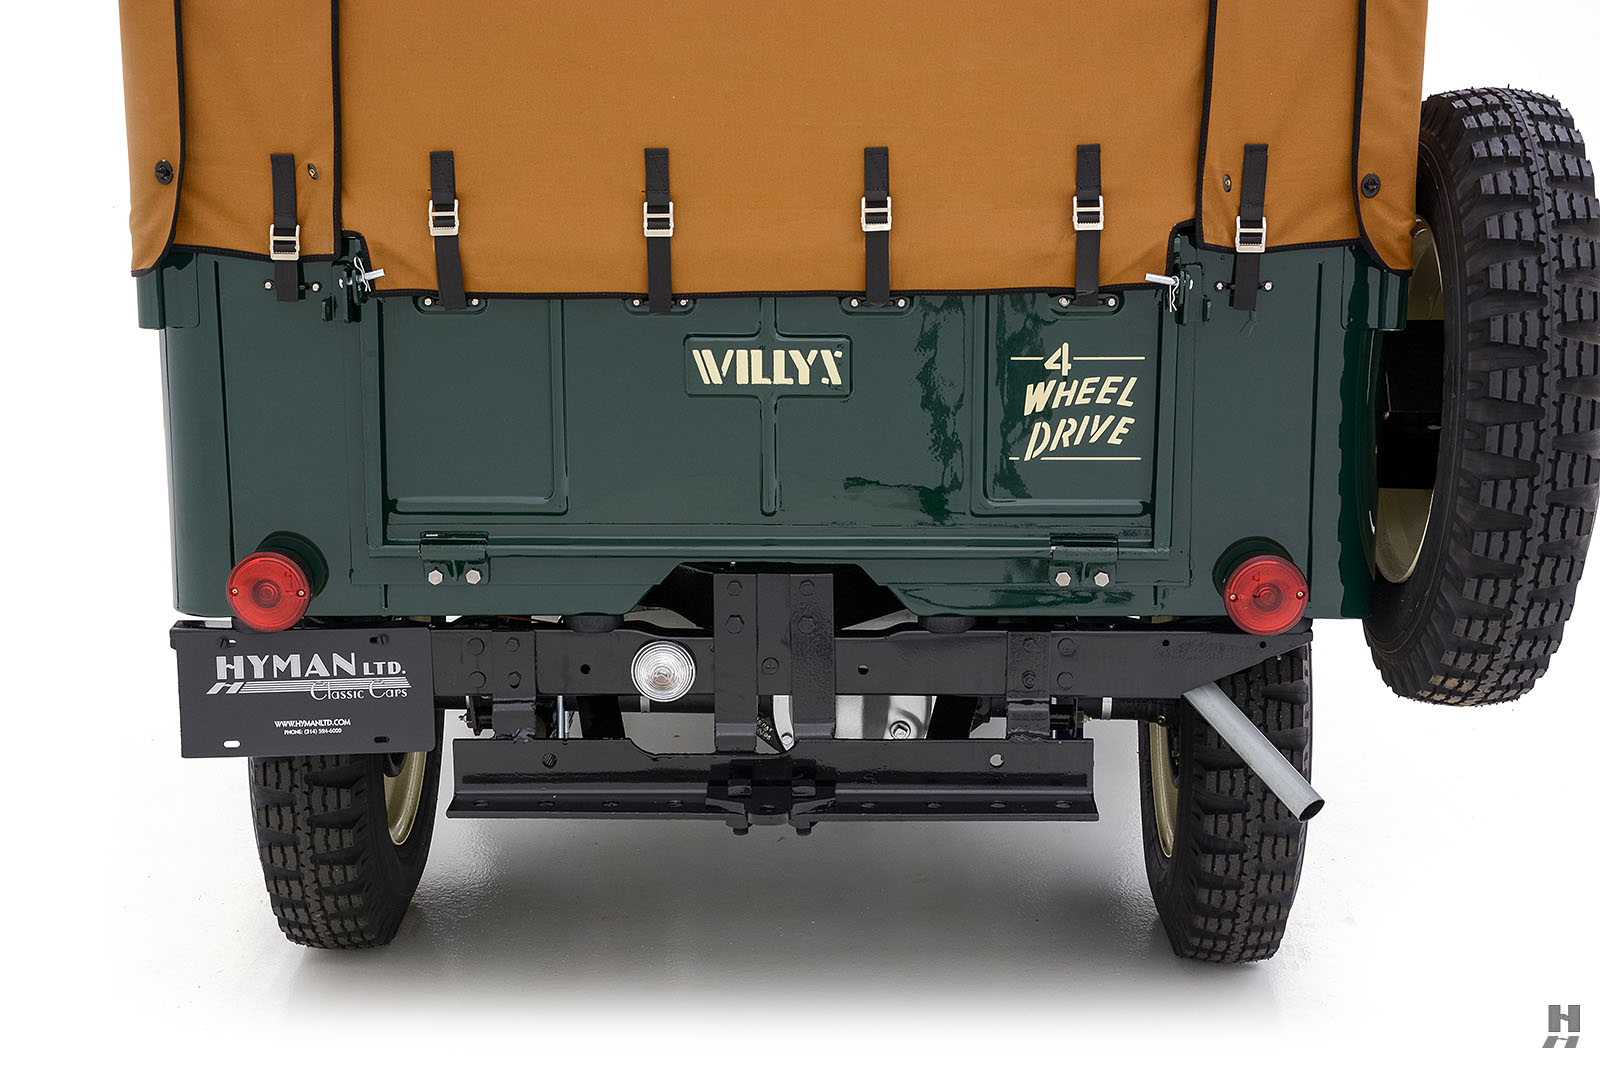 1959 willys-jeep cj-3b 1/4 ton